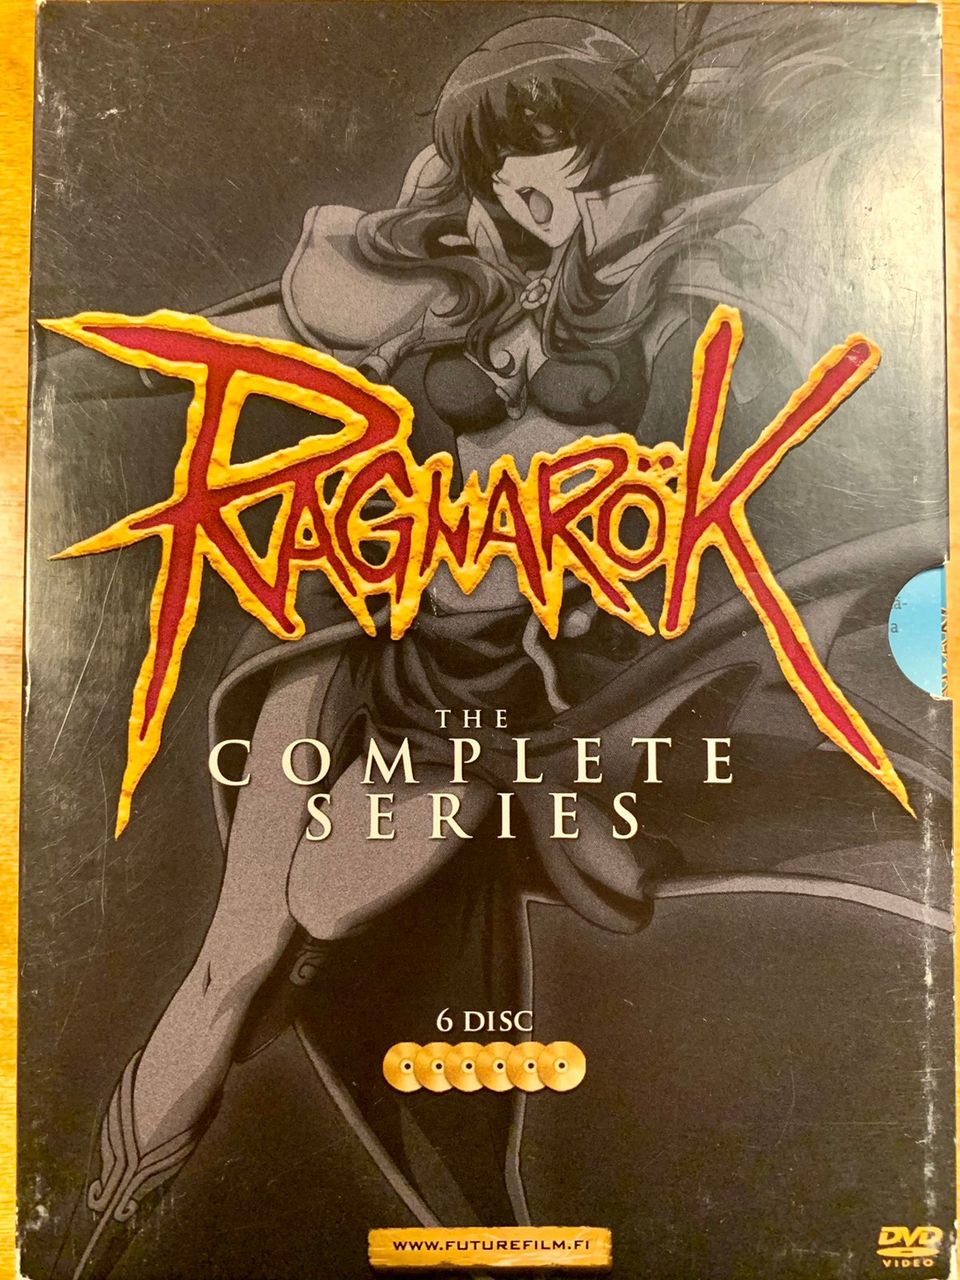 Ragnarök The Complete Series DVD anime